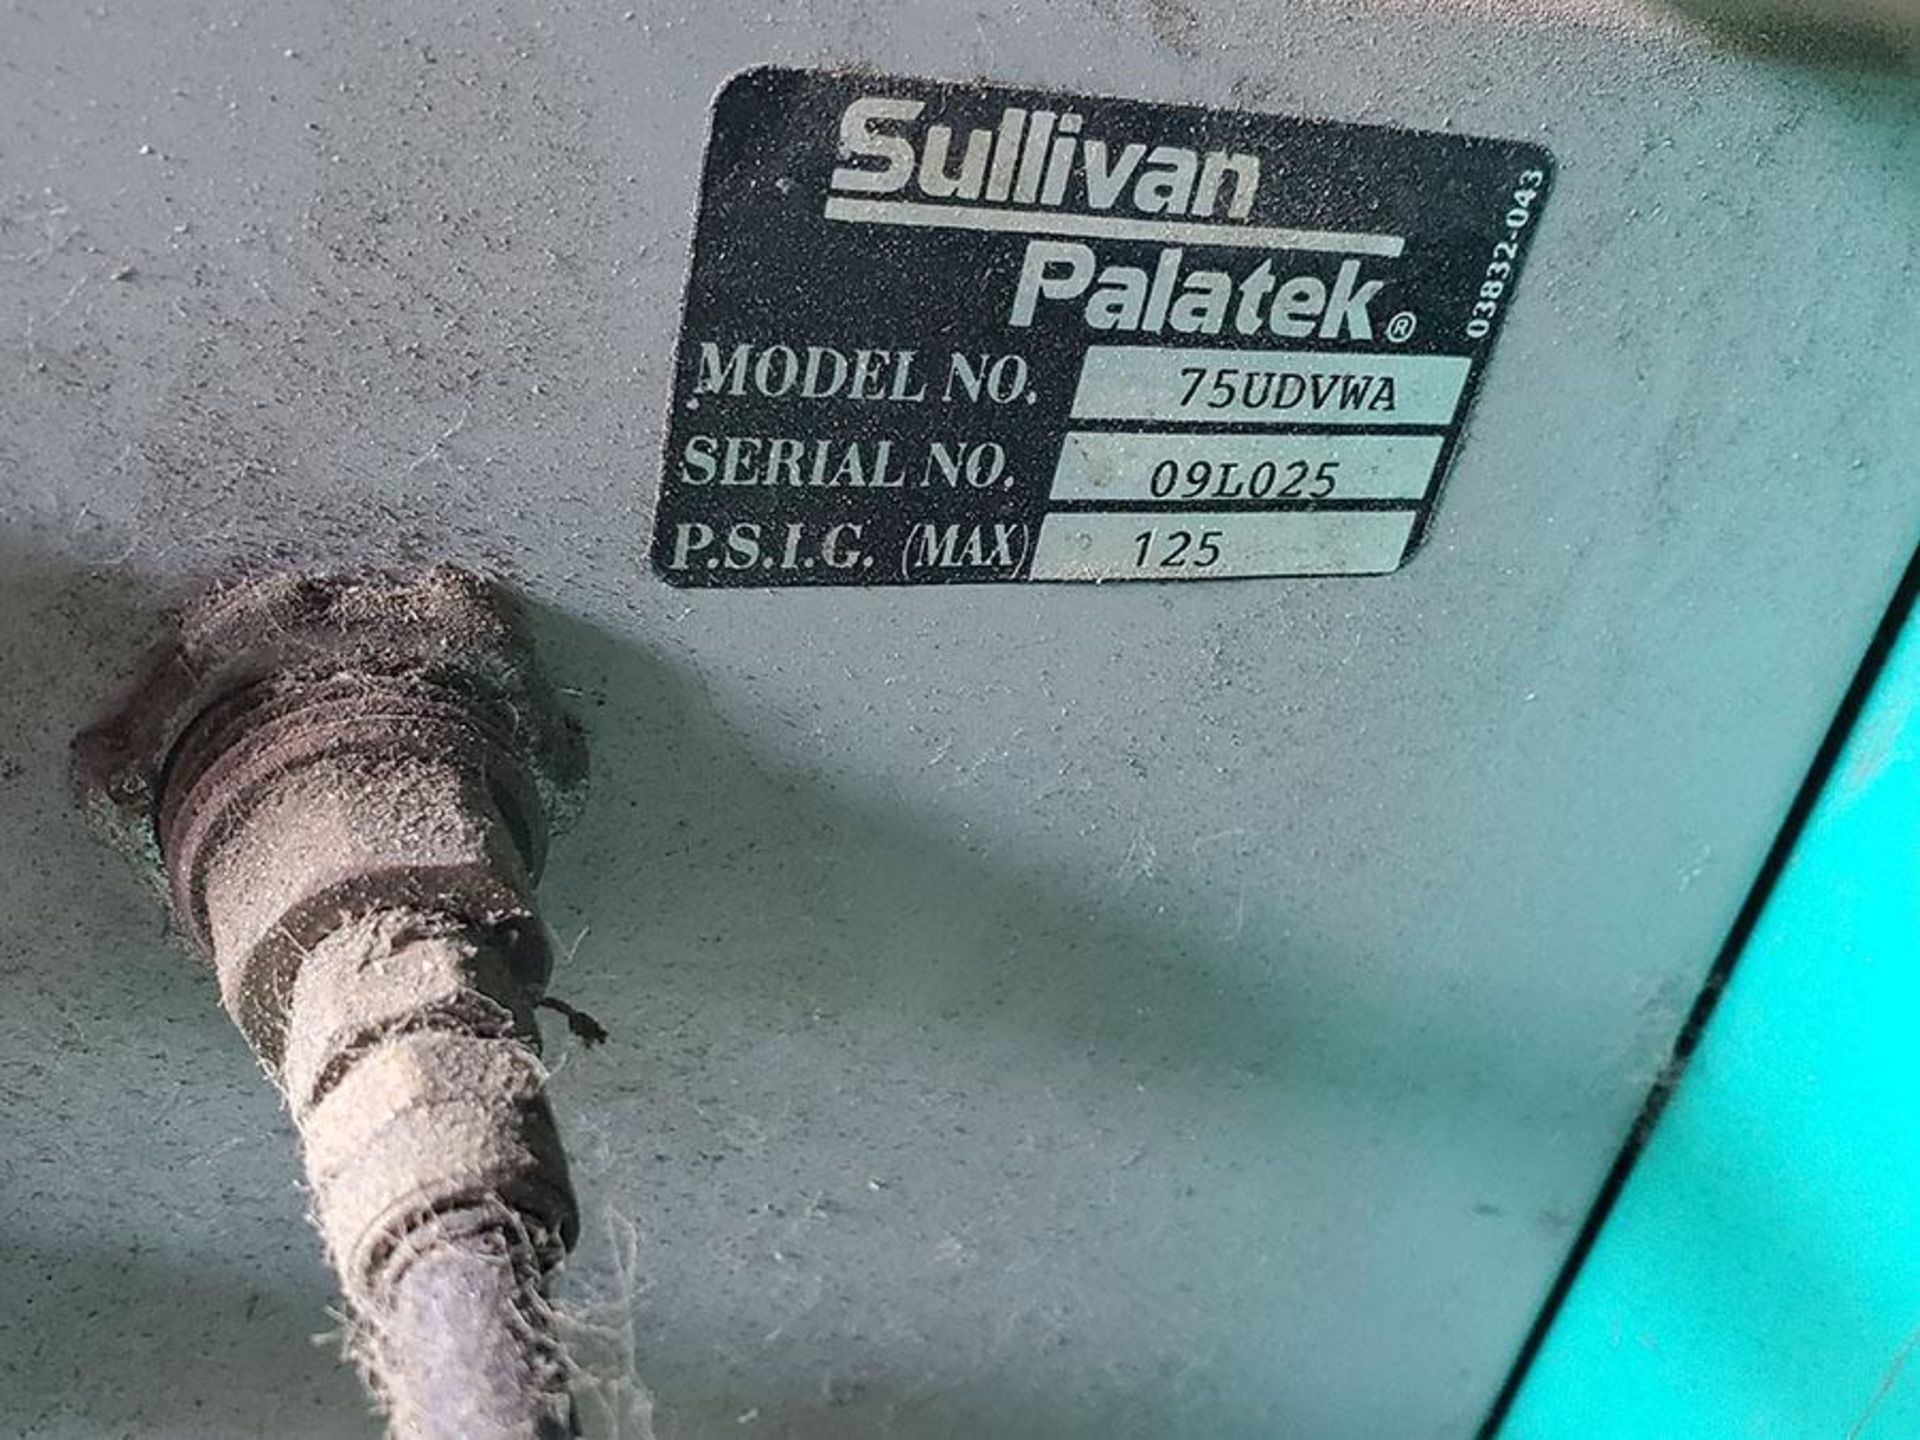 SULLIVAN PALATEK AIR COMPRESSOR WITH DRYER AND 400 GALLON TANK; COMPRESSOR: 460V 3PHASE 60HZ 92(3.1) - Image 4 of 4